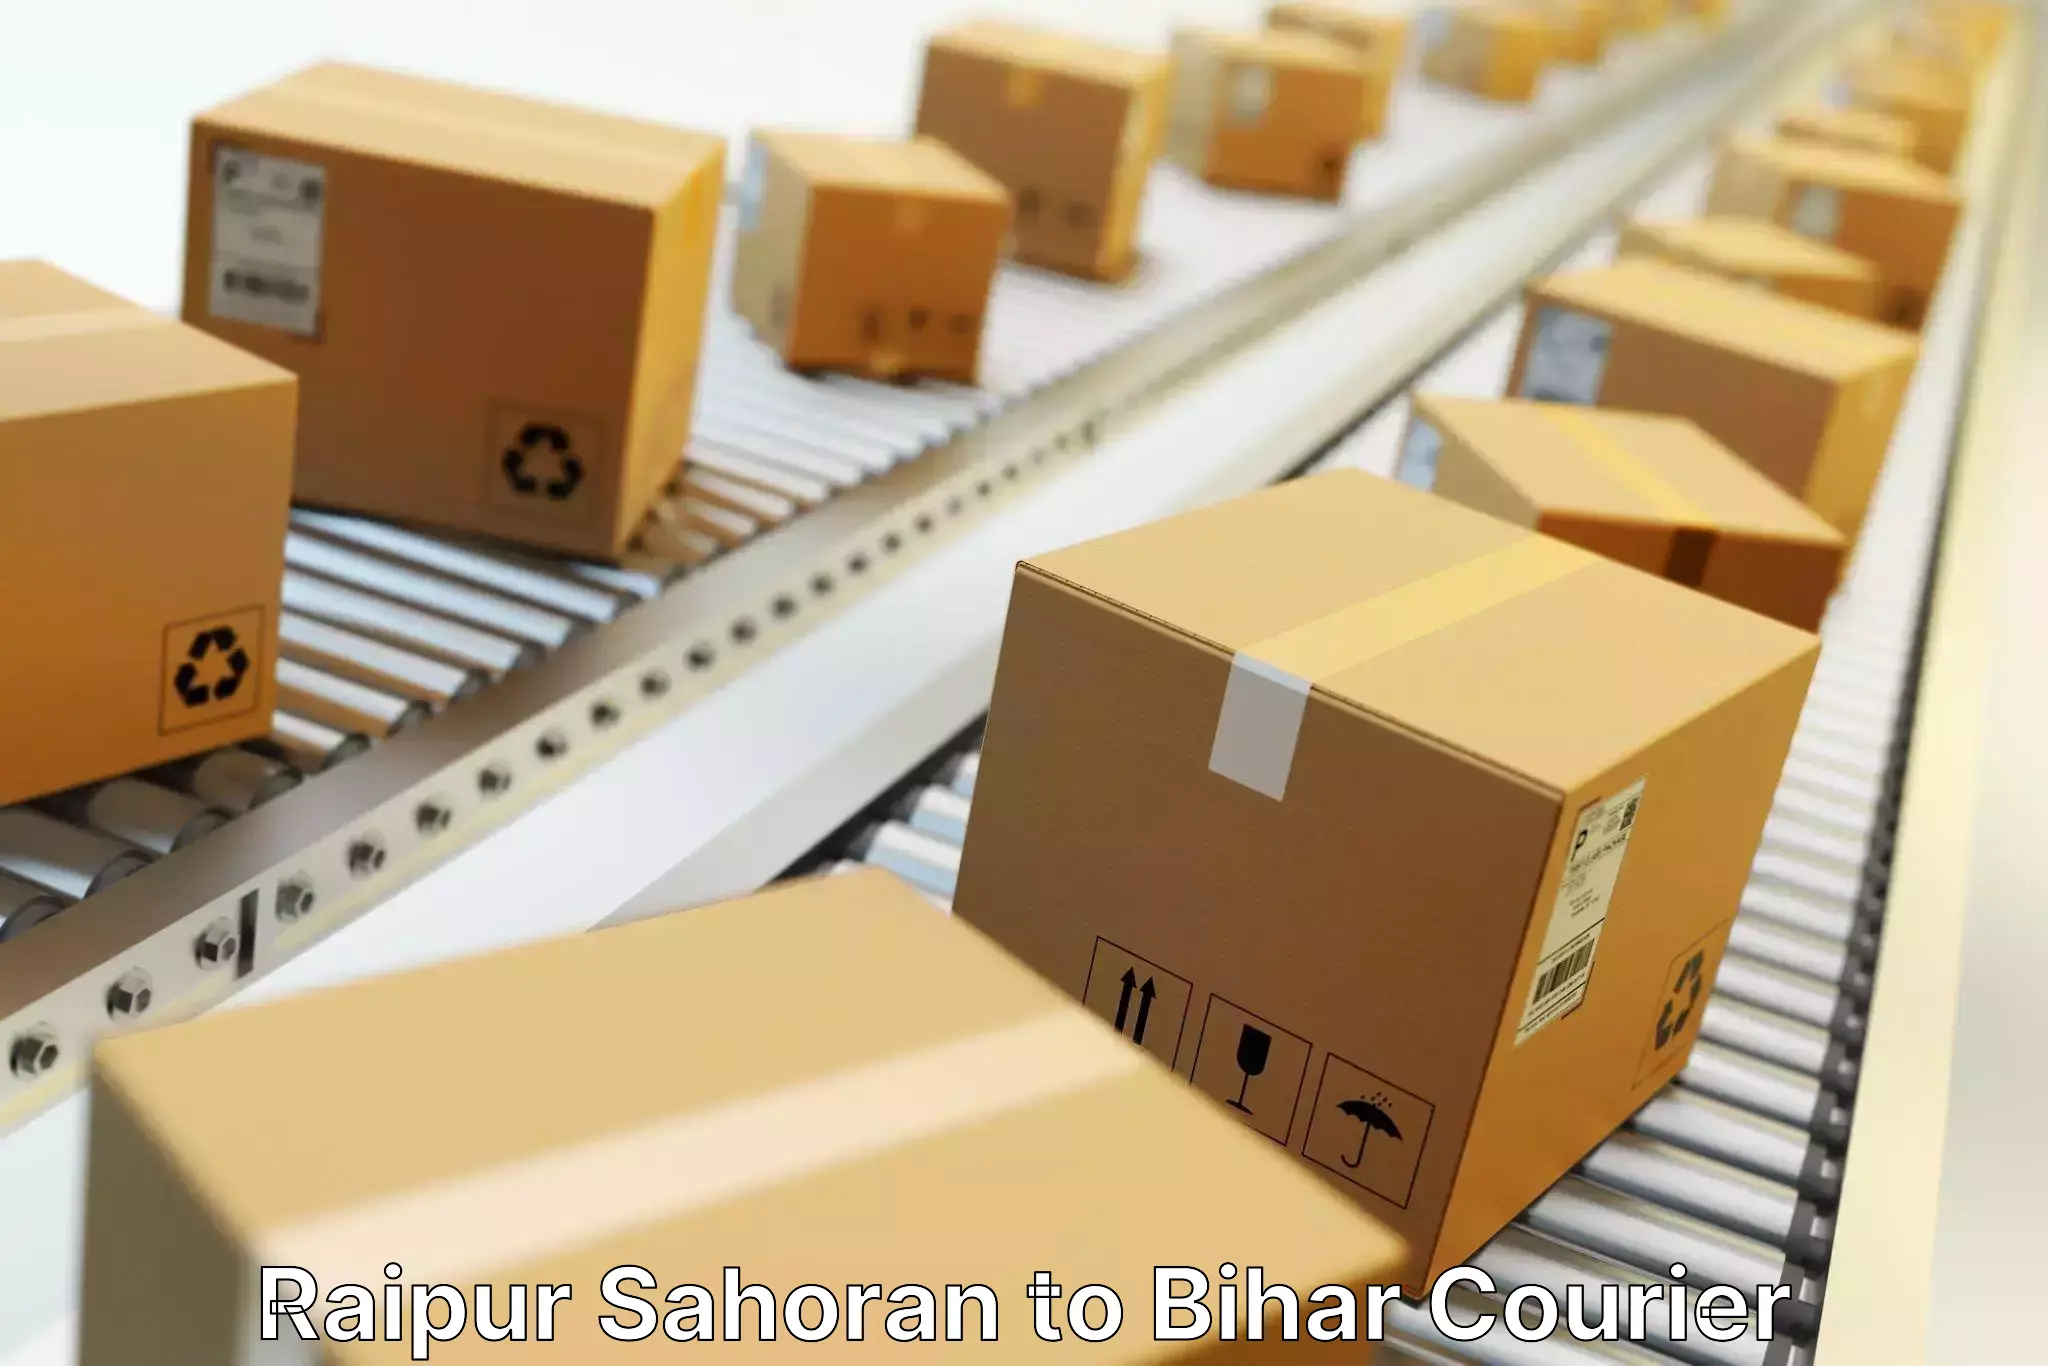 Express delivery network Raipur Sahoran to Jhanjharpur